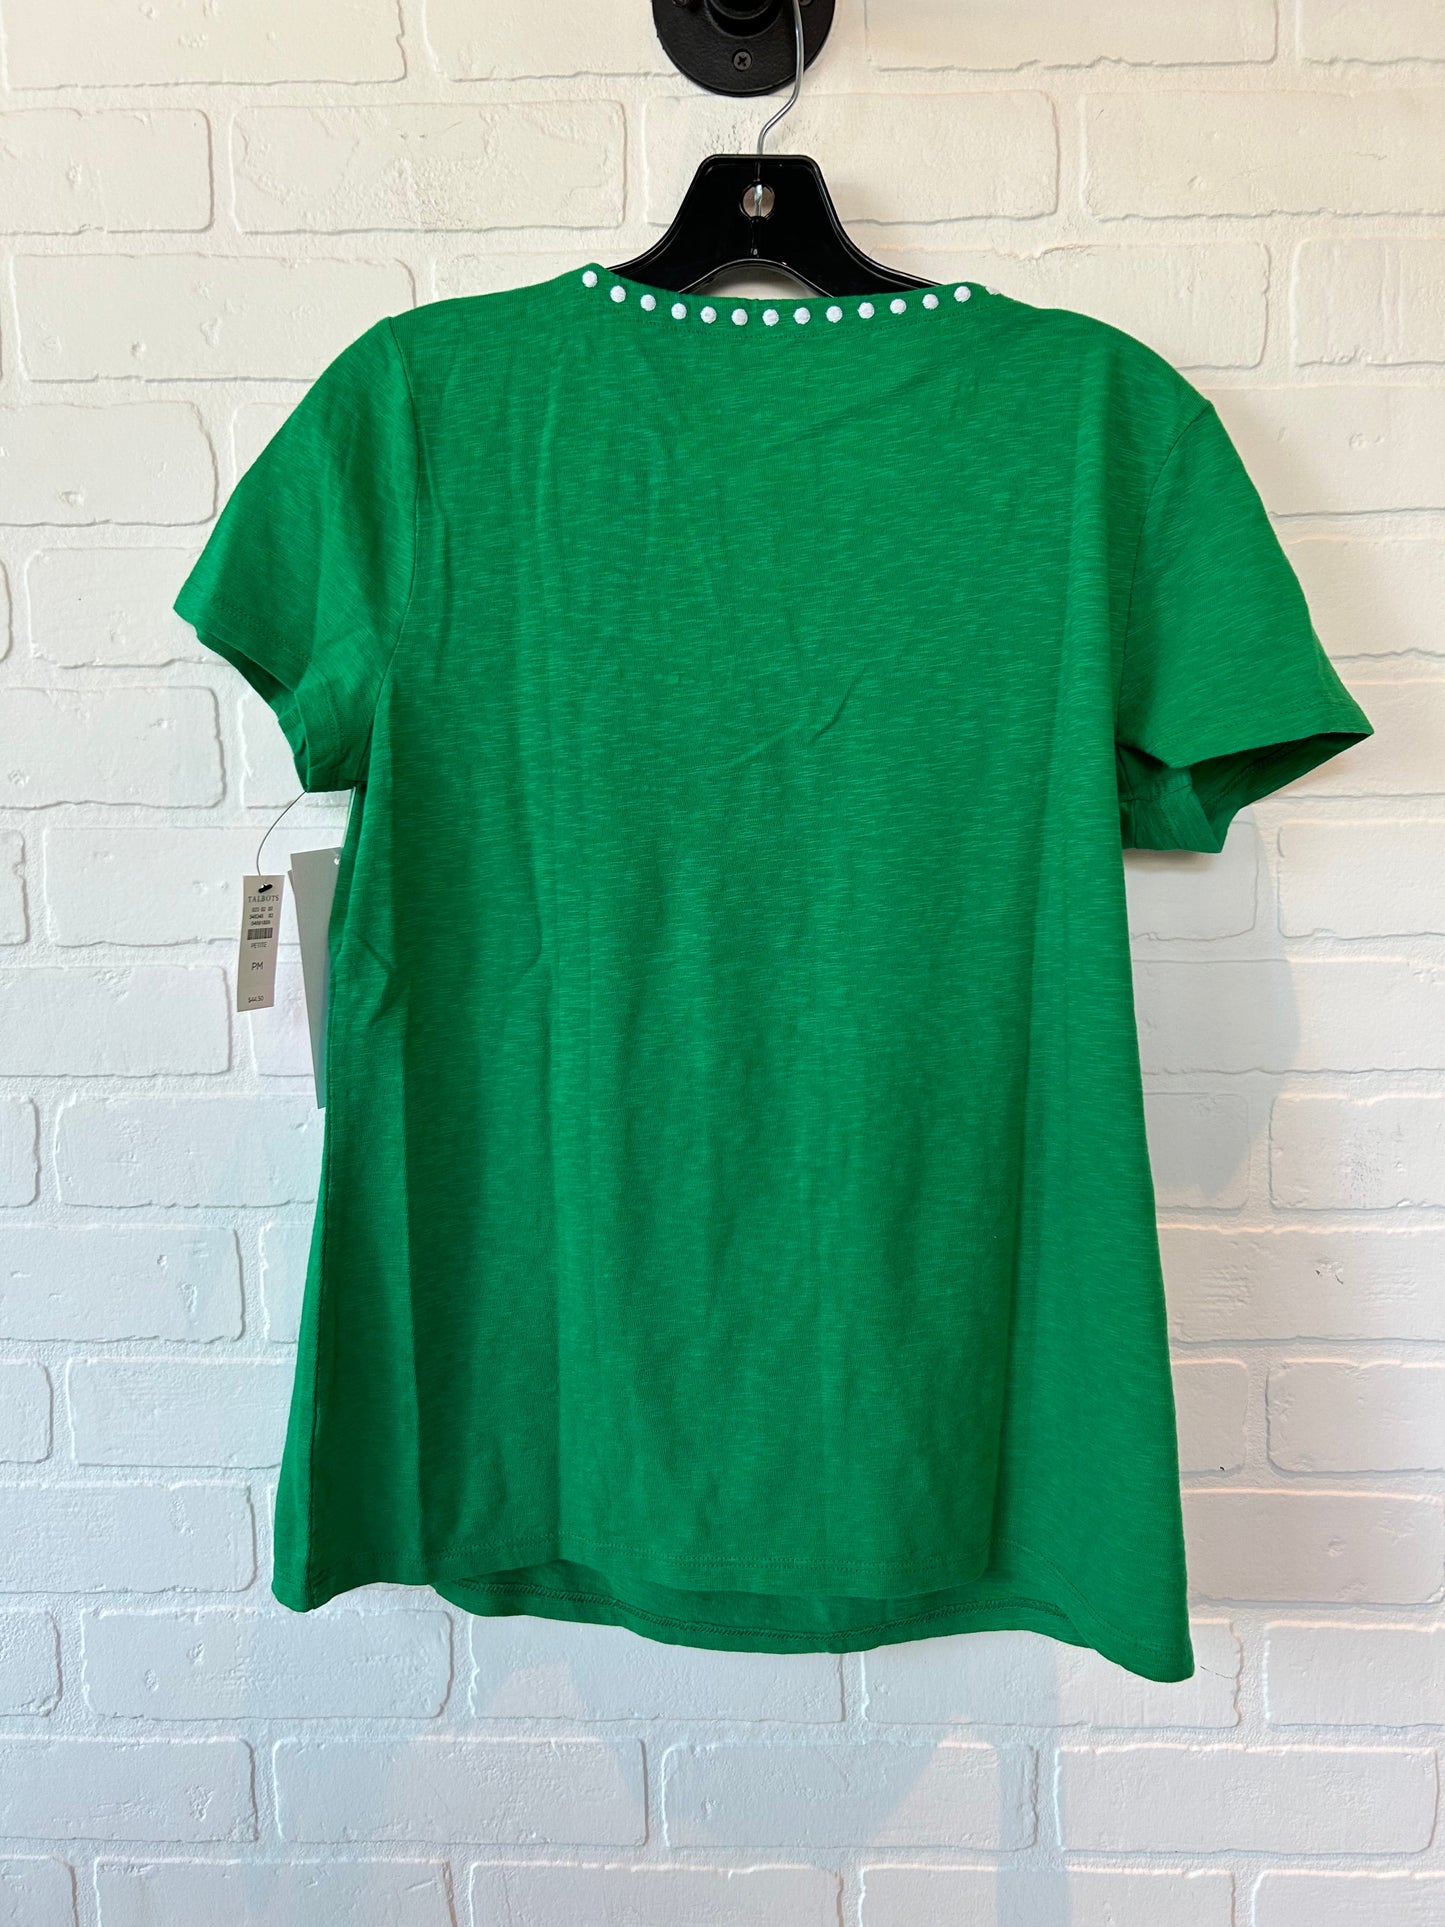 Green & White Top Short Sleeve Basic Talbots, Size M